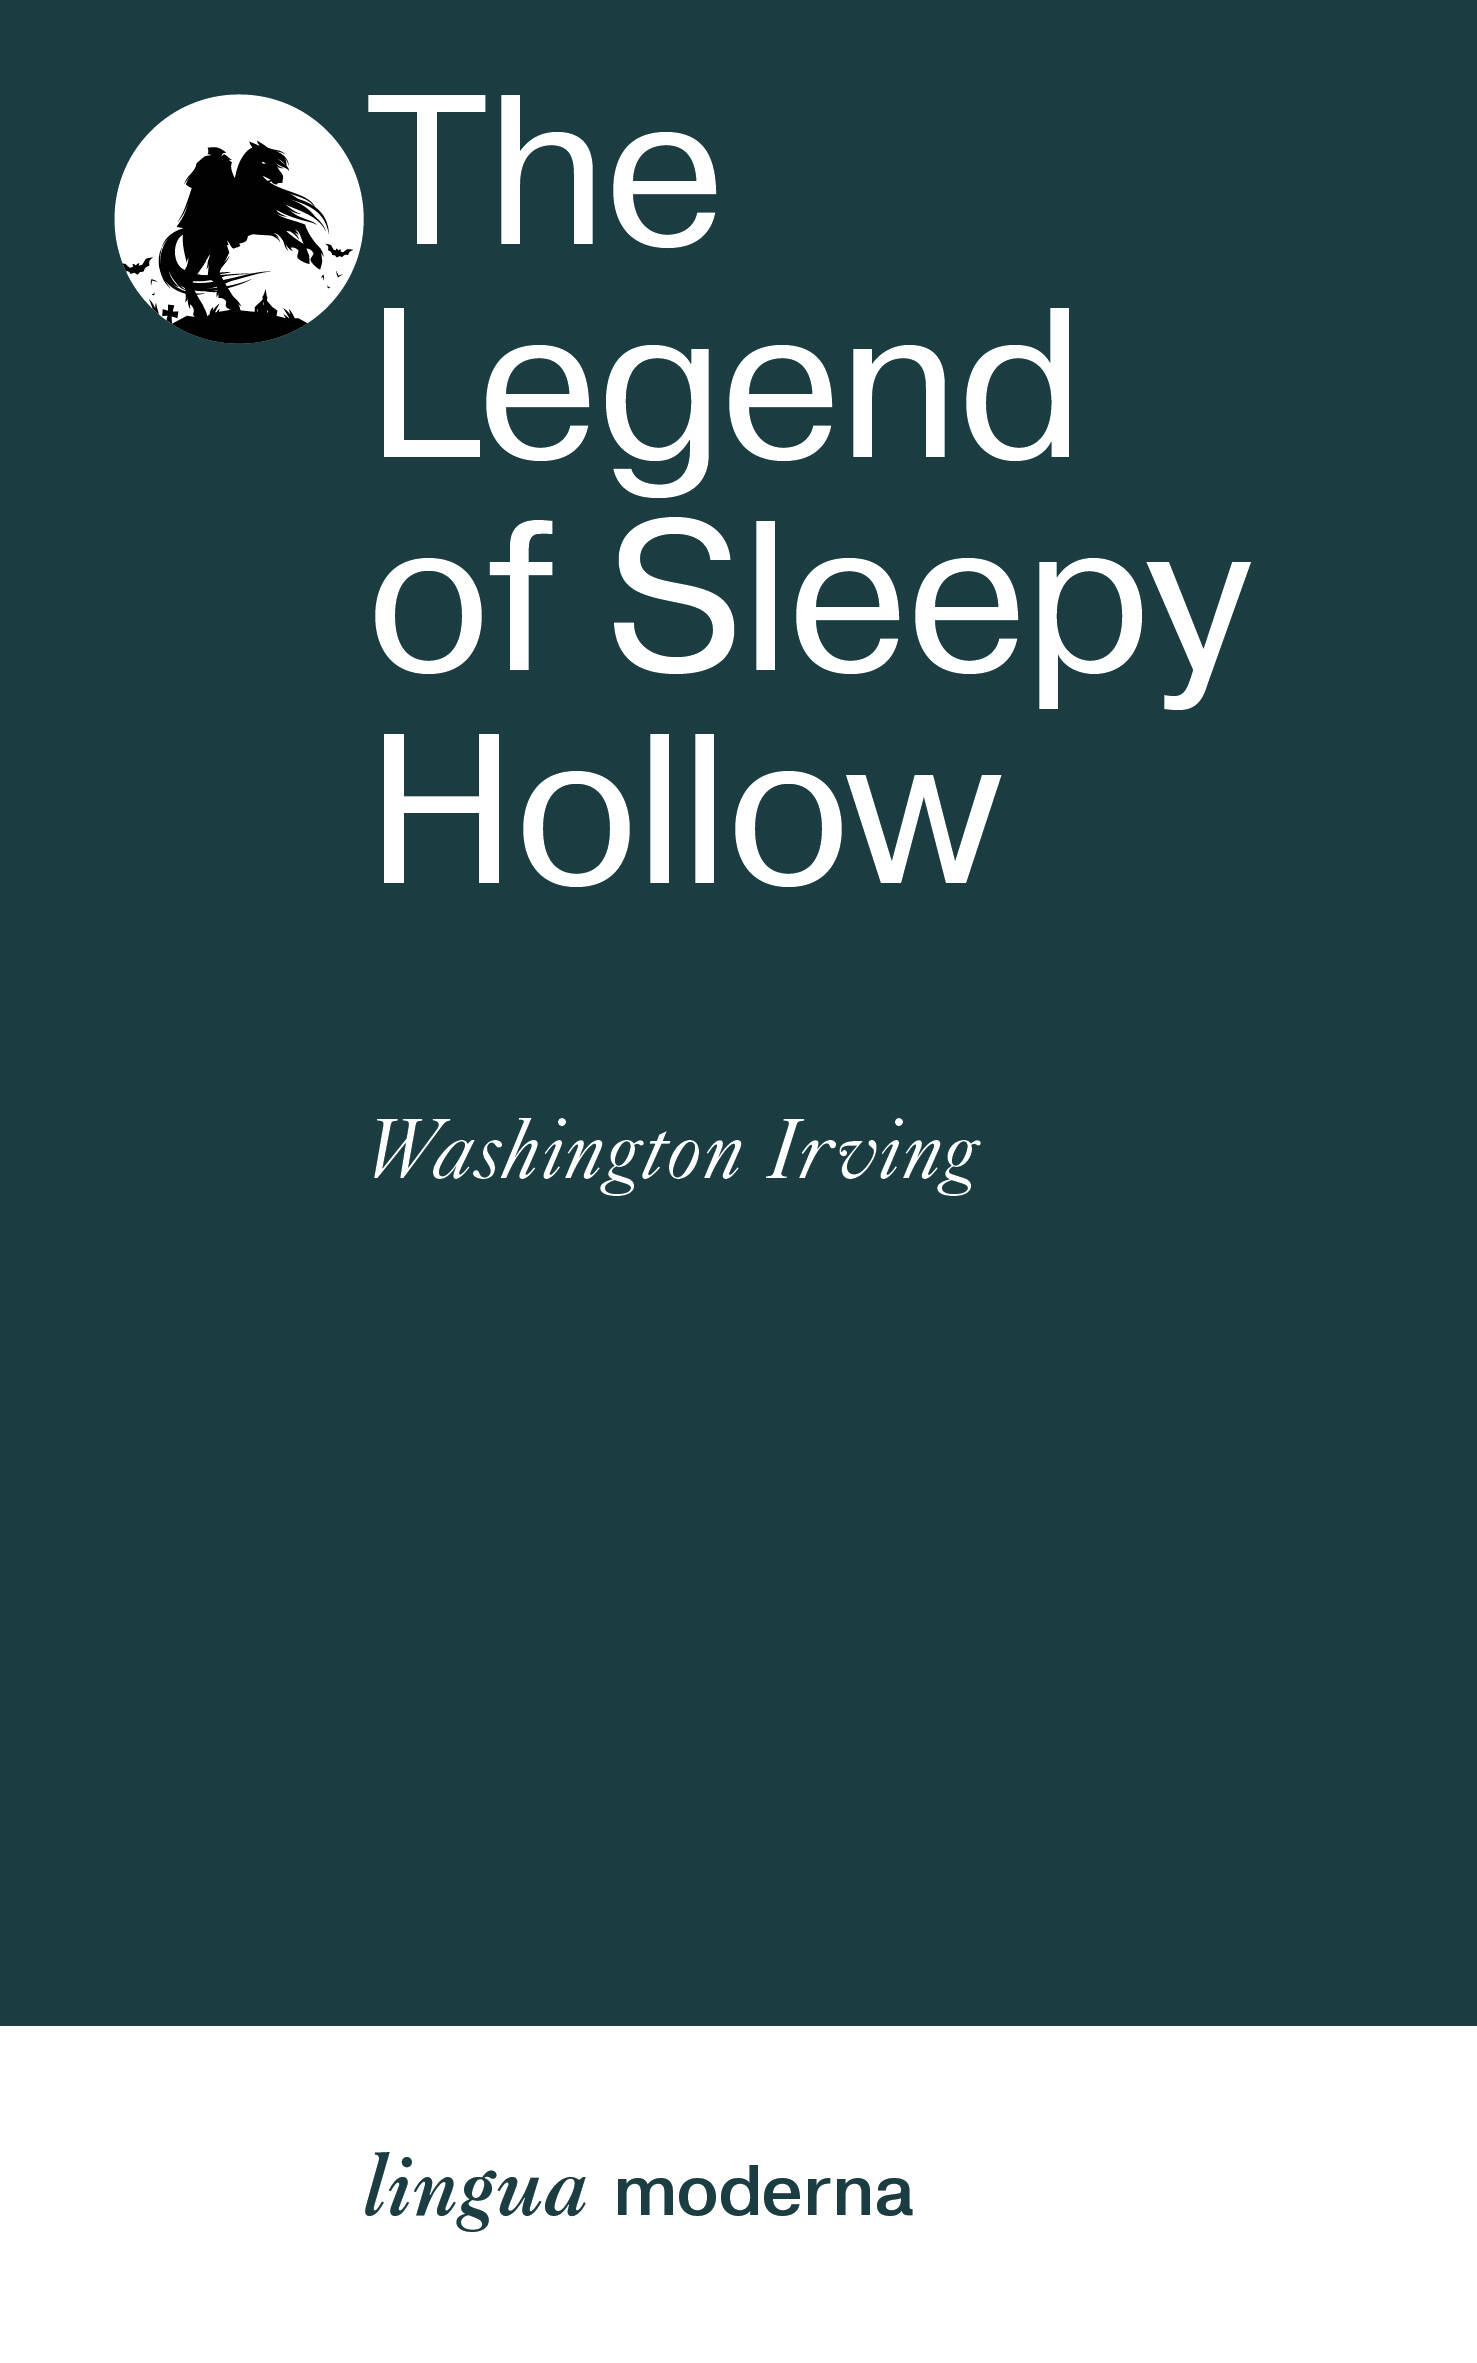 irving washington the legend of sleepy hollow and other ghostly tales Irving Washington The Legend of Sleepy Hollow